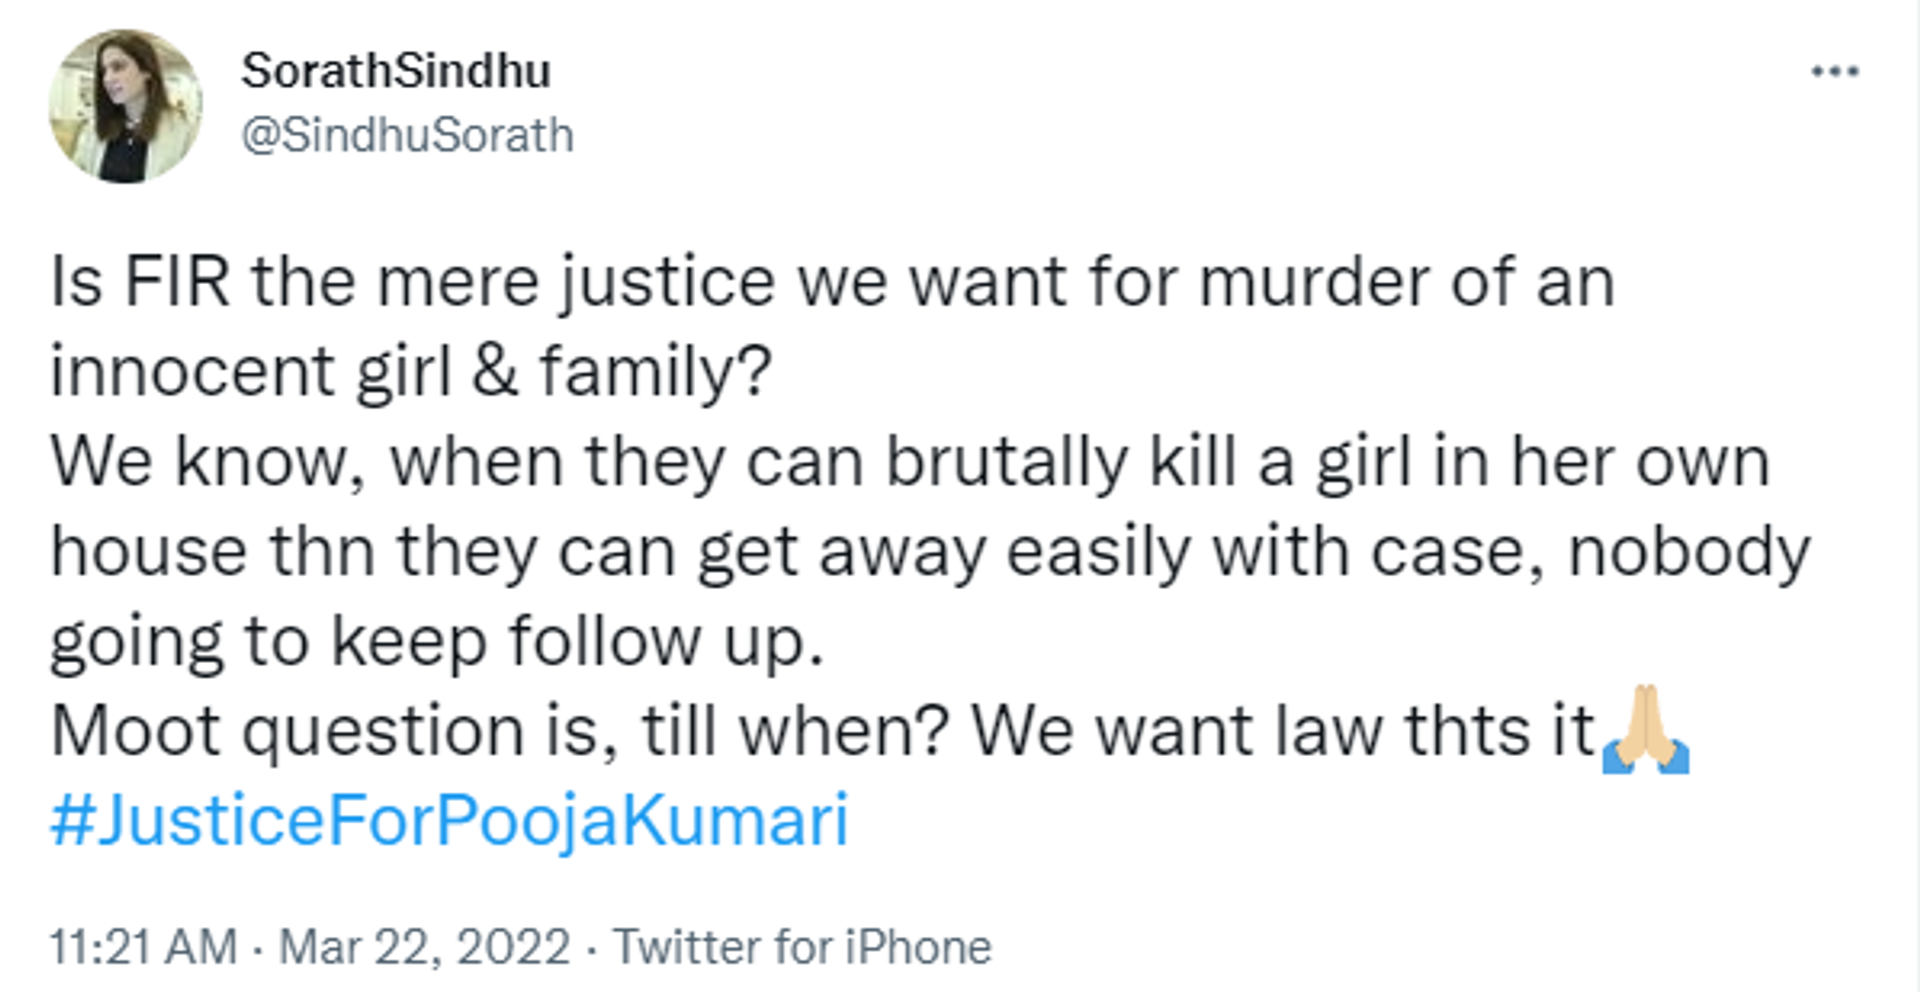 Twitter User from Pakistan Condoles Killing of Hindu Girl - Sputnik International, 1920, 22.03.2022